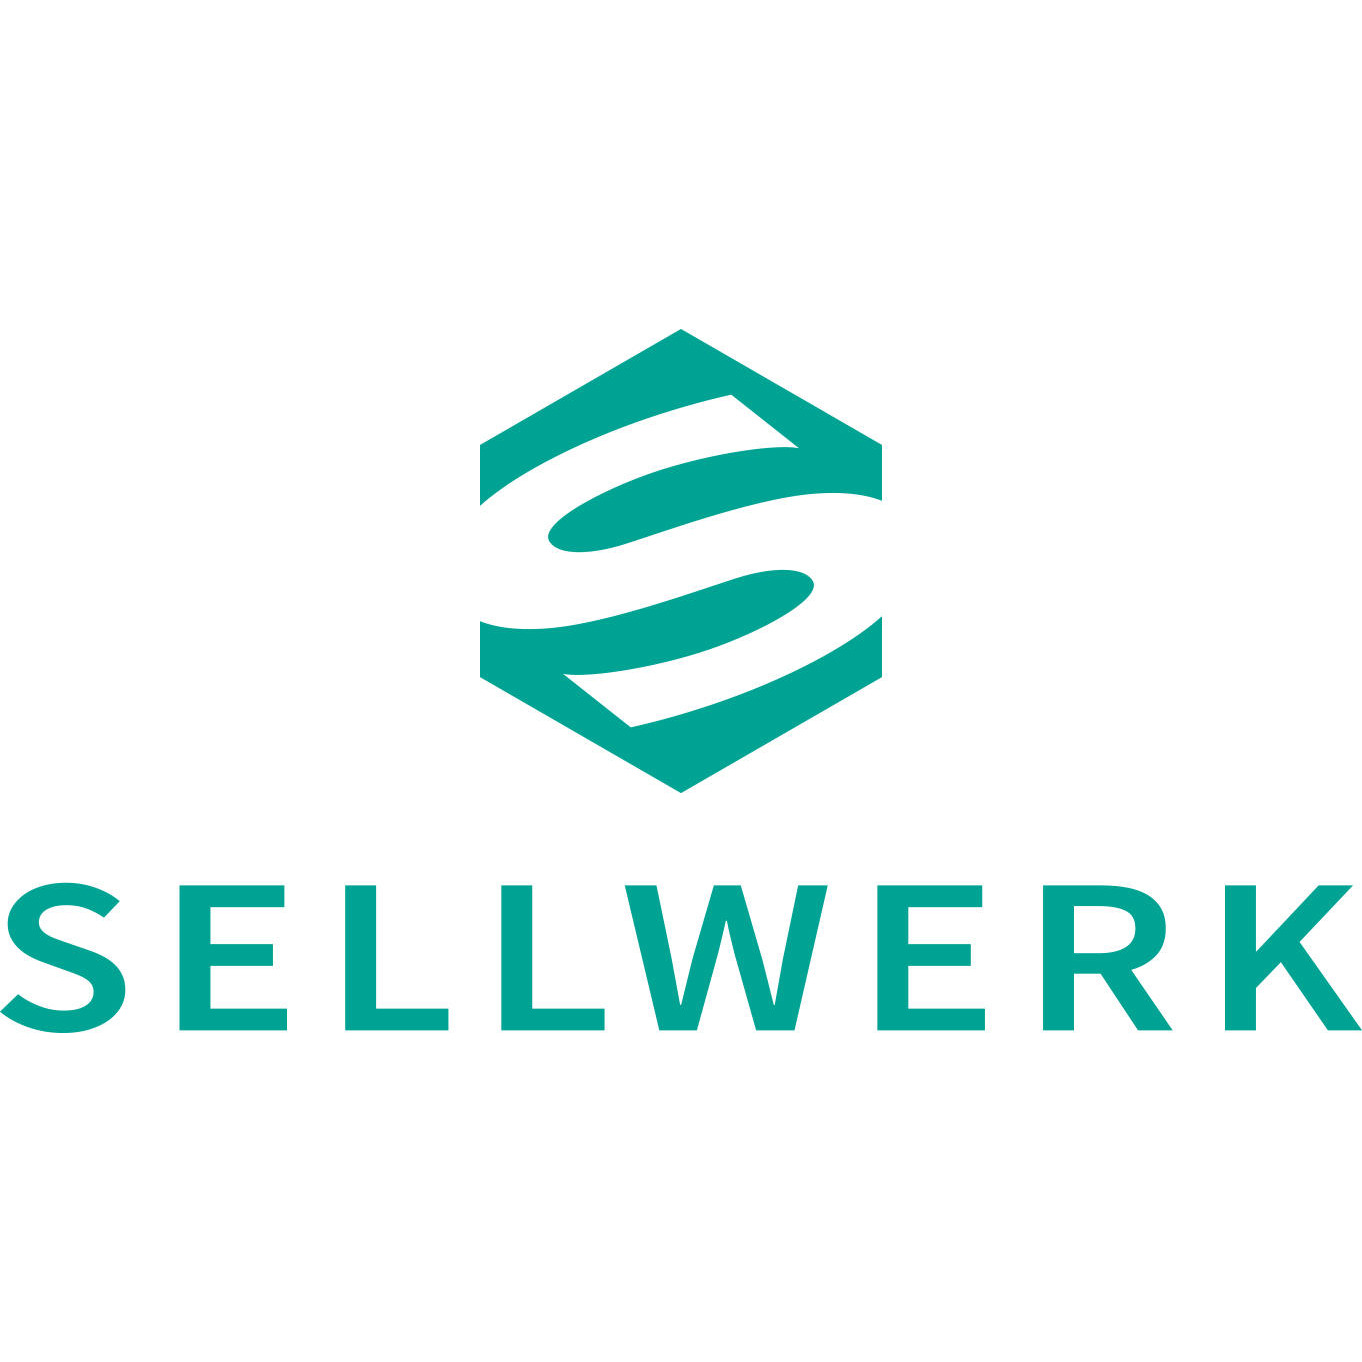 SELLWERK - Bonn, Nordrhein-Westfalen Logo